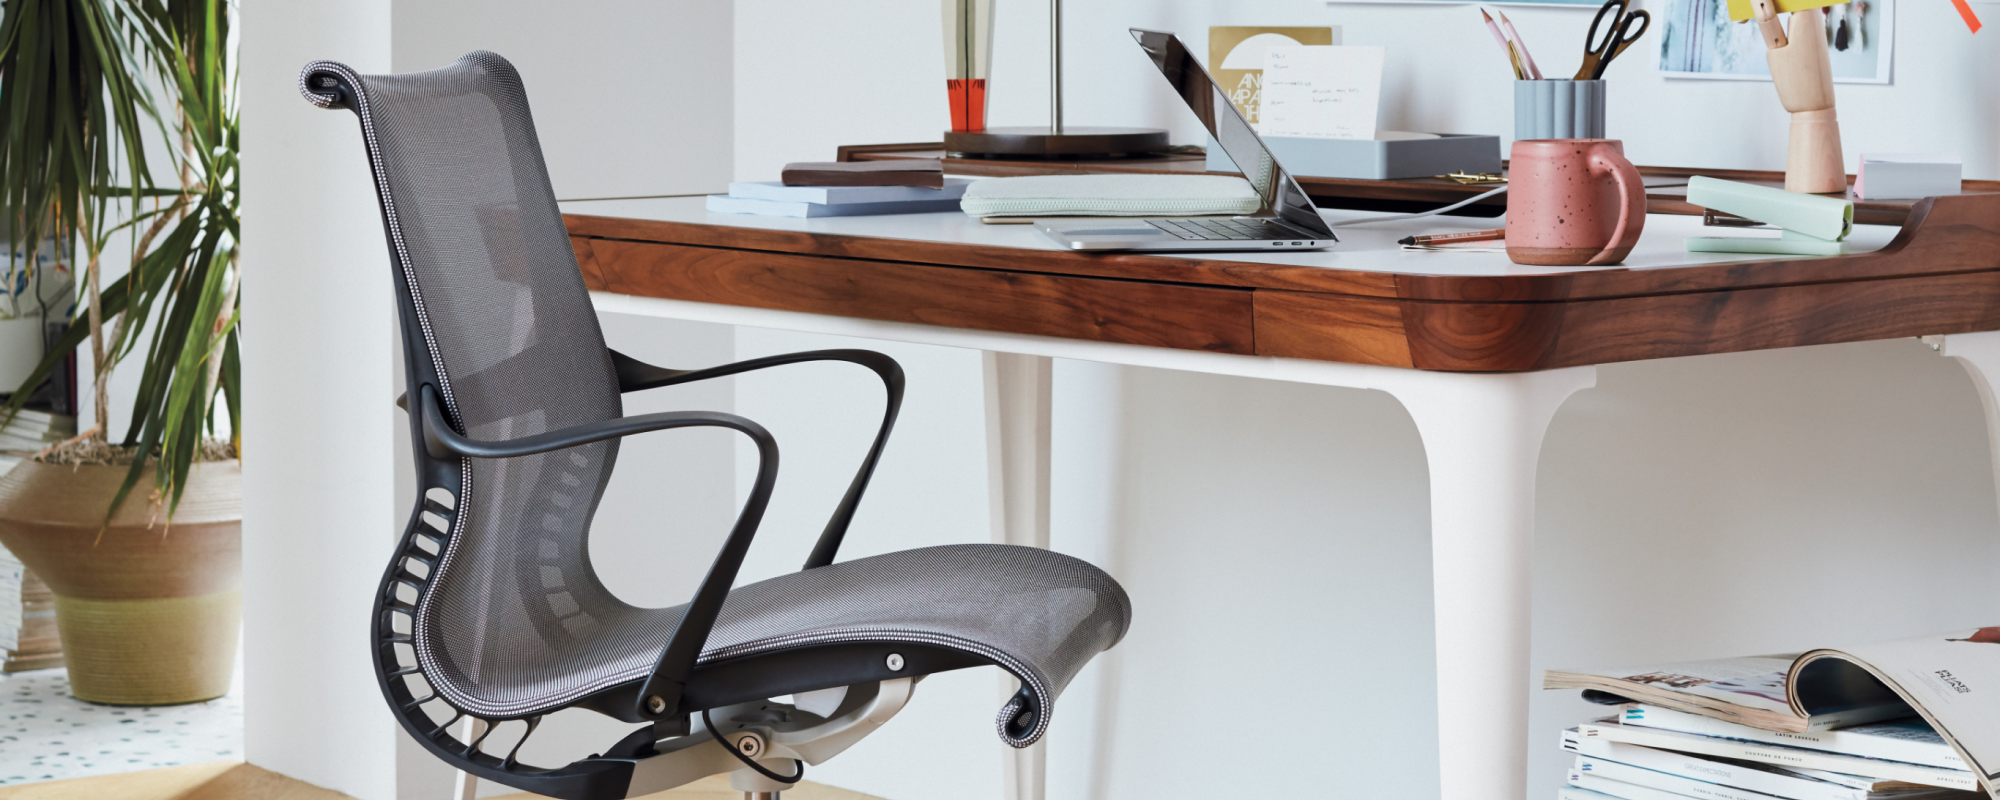 A cut view of a Setu Chair at a home office desk